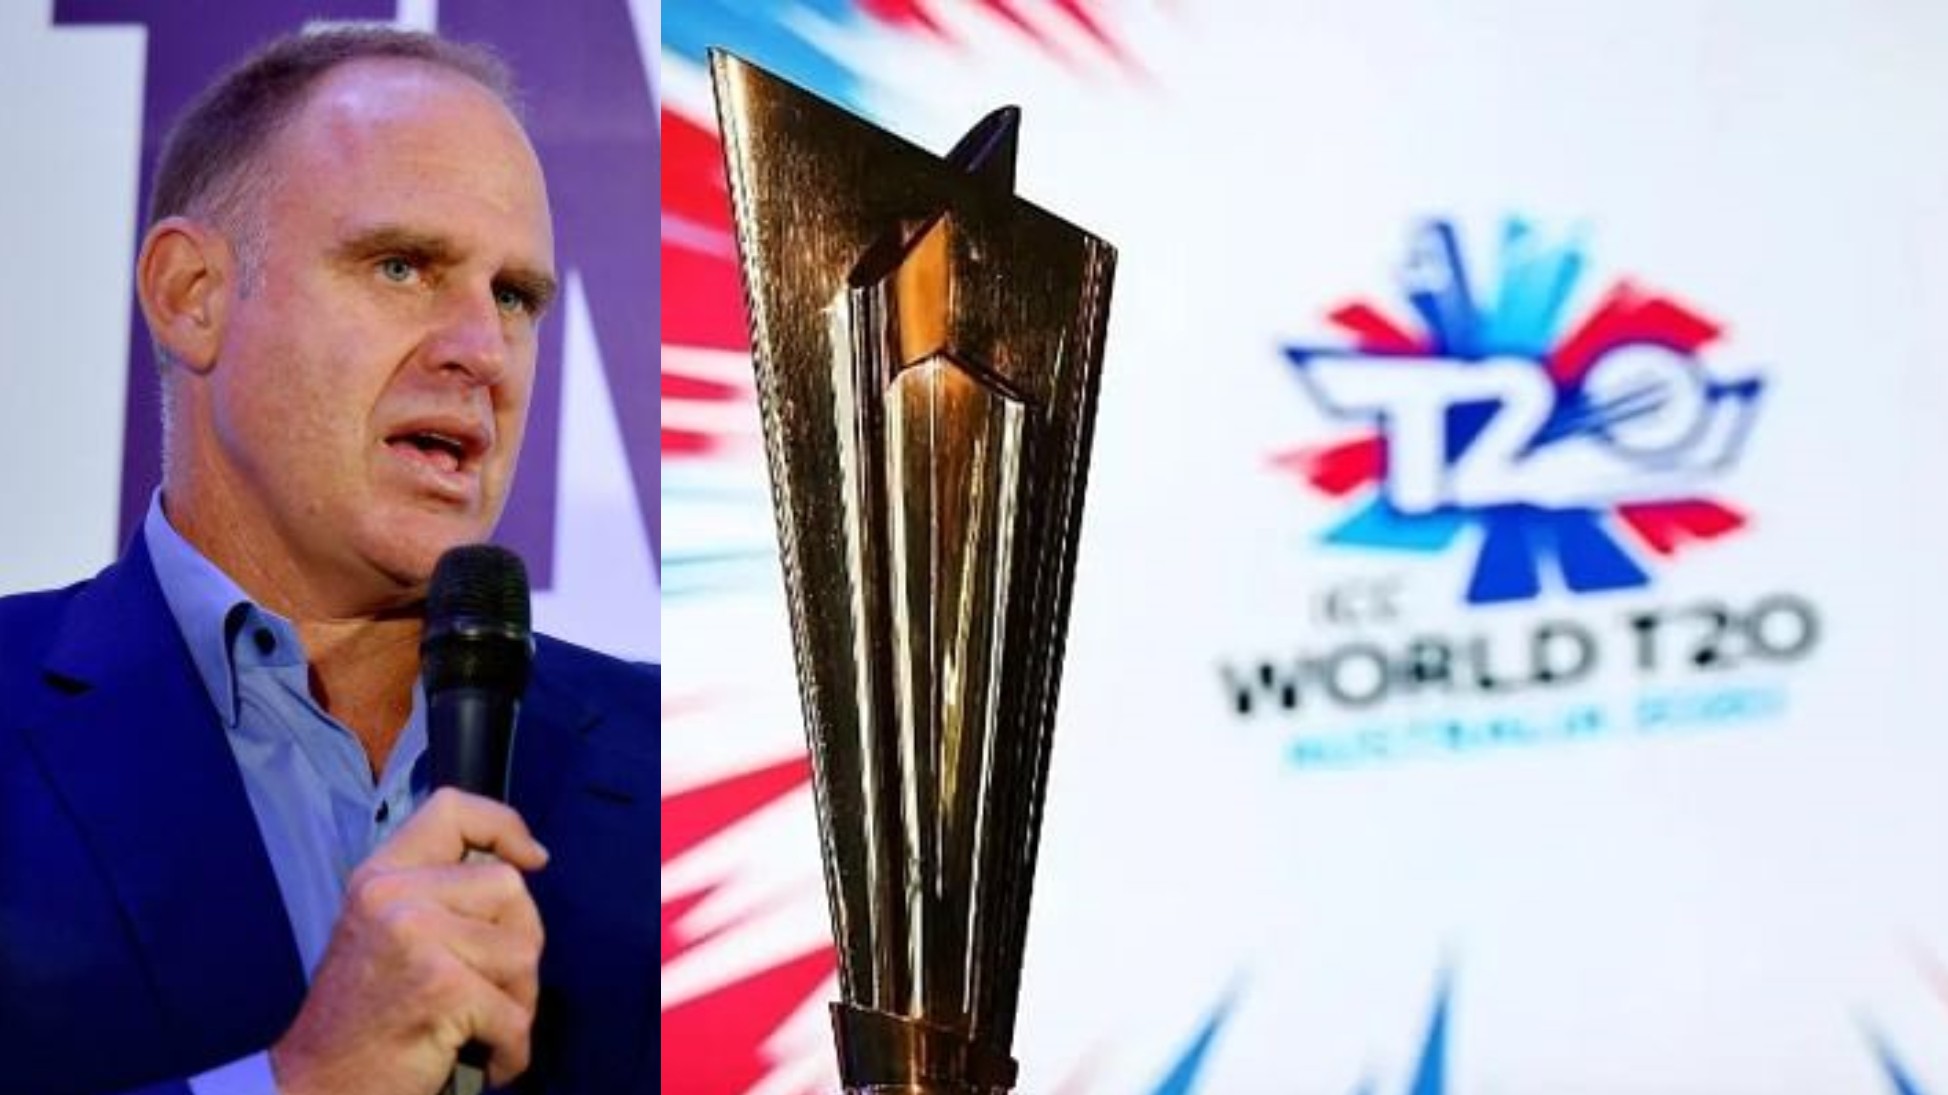 Matthew Hayden says chances are 'slim' of T20 World Cup happening in Australia